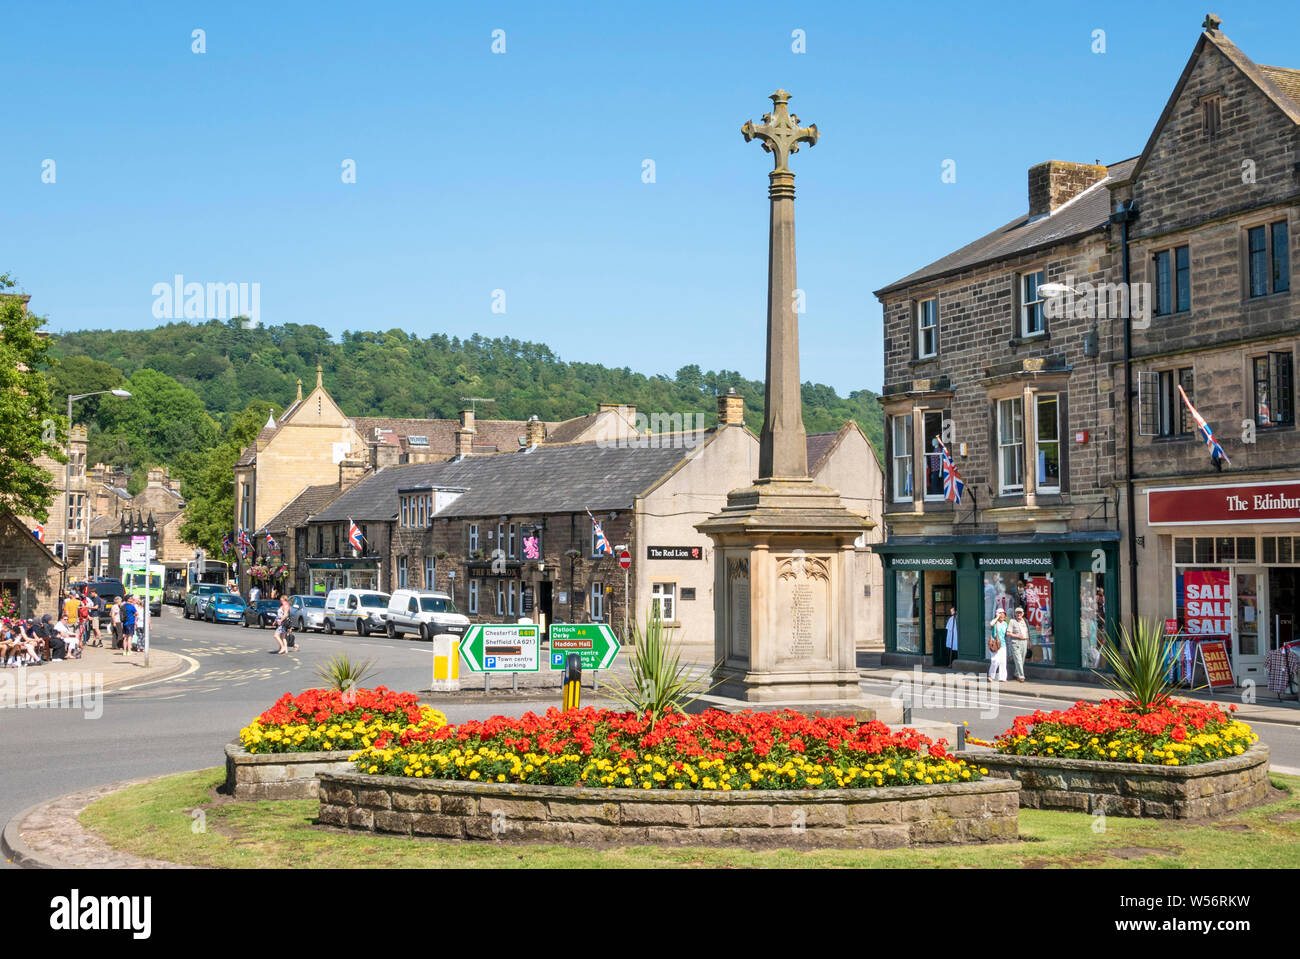 Das Kriegerdenkmal in der Verkehrsinsel in Bakewell Stadtzentrum Bakewell Peak District National Park Bakewell Derbyshire England uk gb Europa Stockfoto